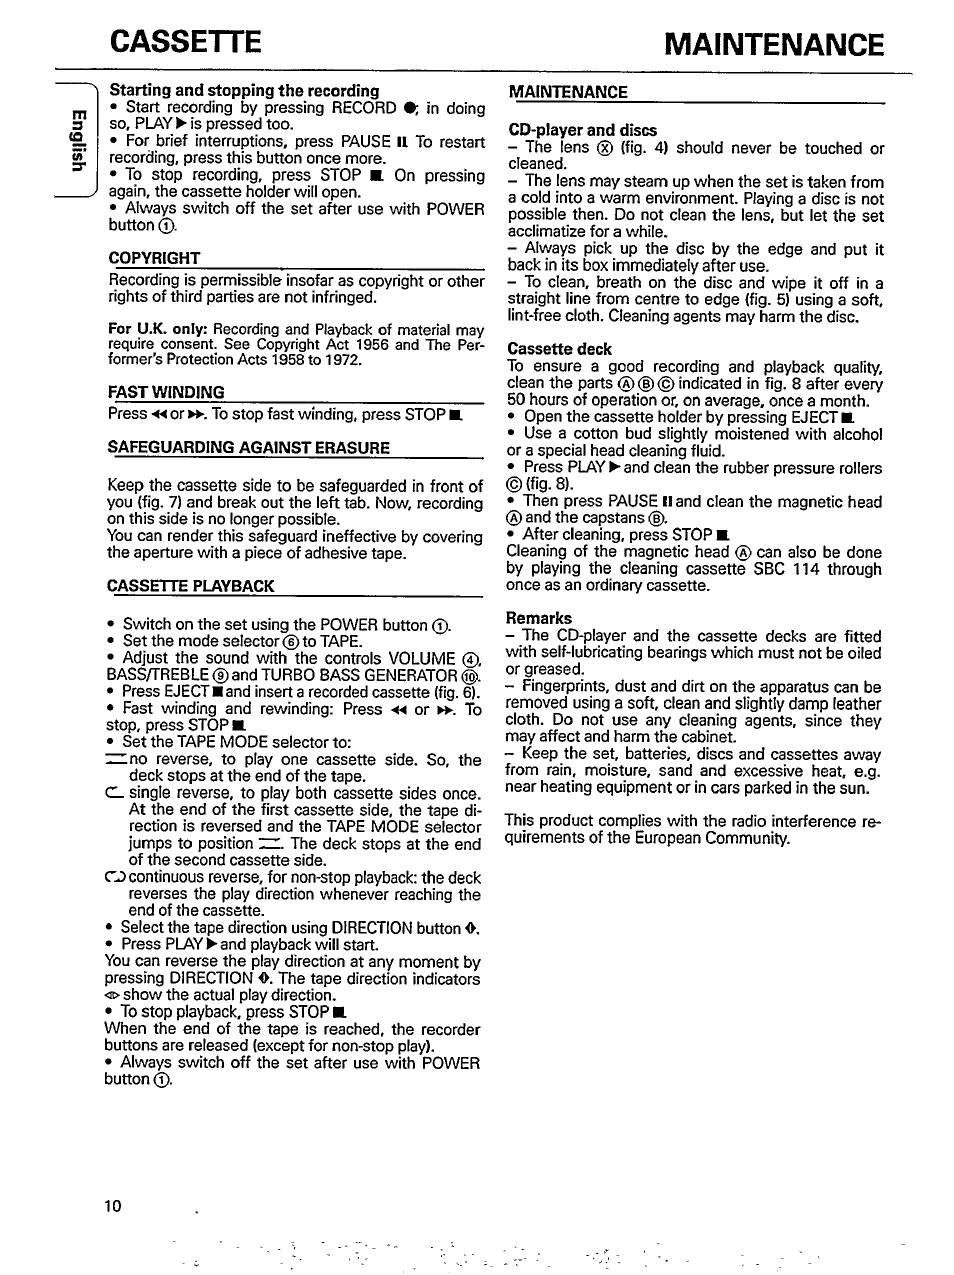 Maintenance, Cassette maintenance | Philips AZ 8210 User Manual | Page 10 / 14